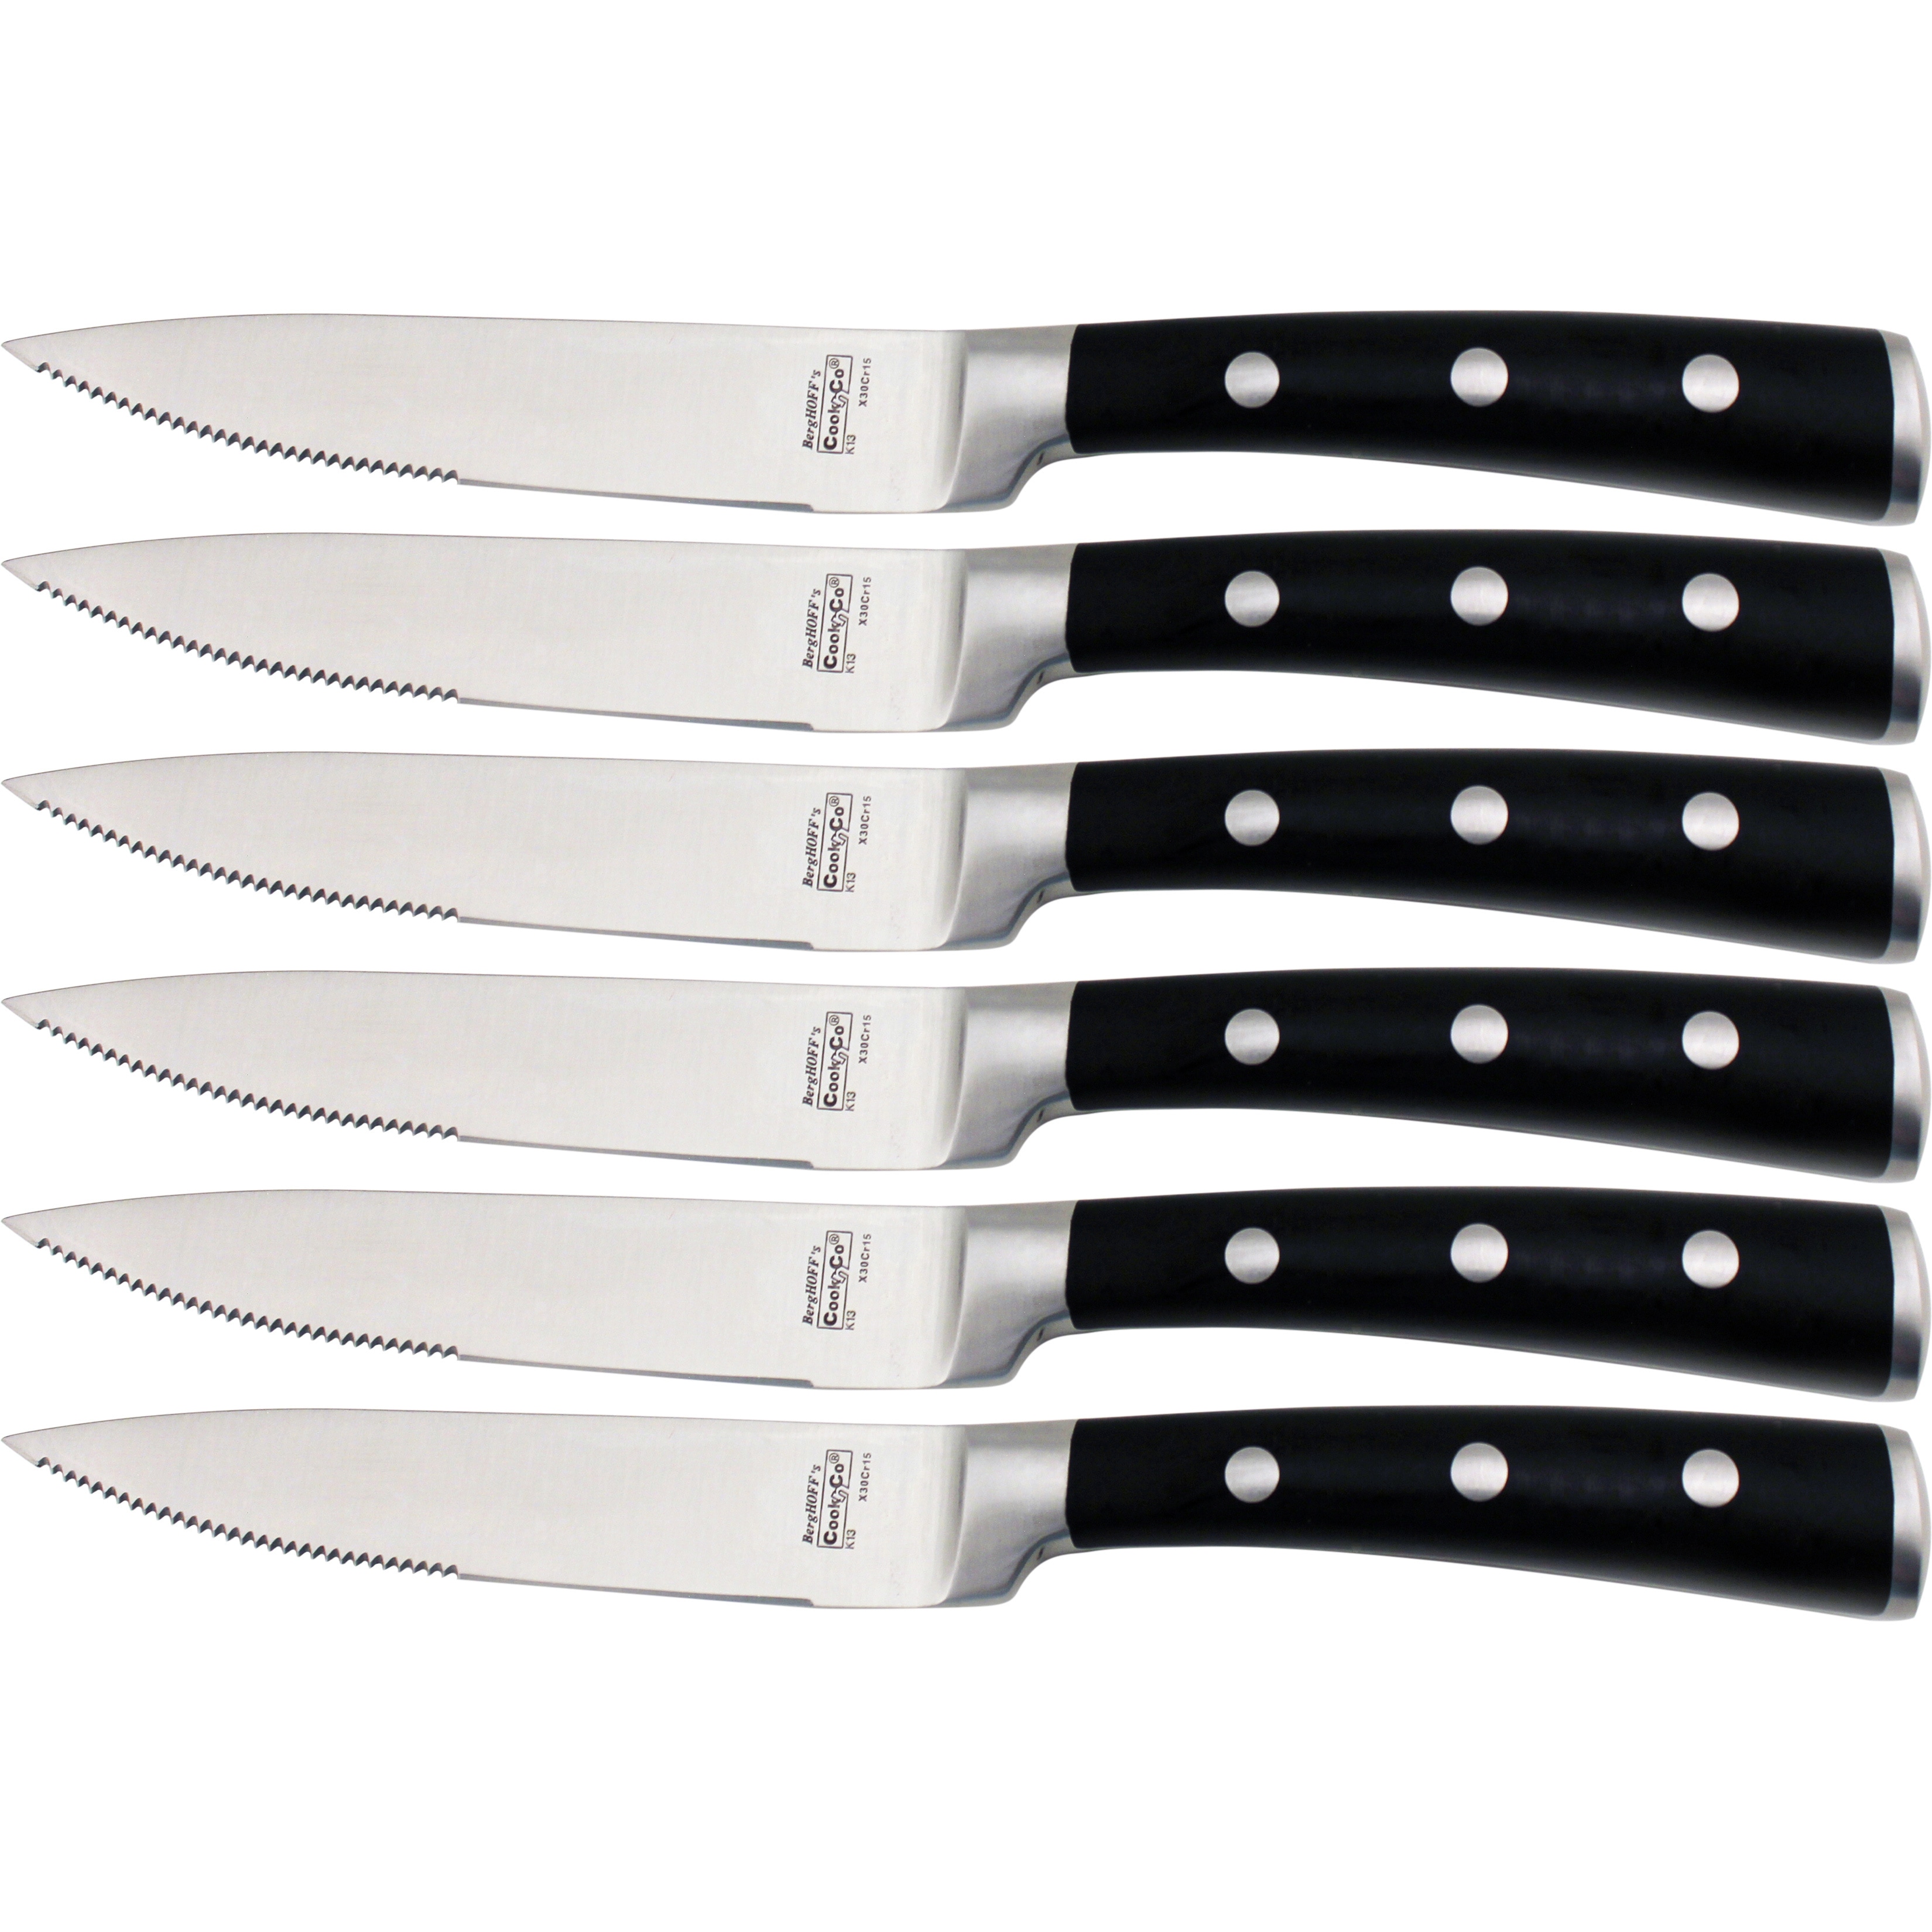 BergHOFF Classico Steak Knife (Set of 6)